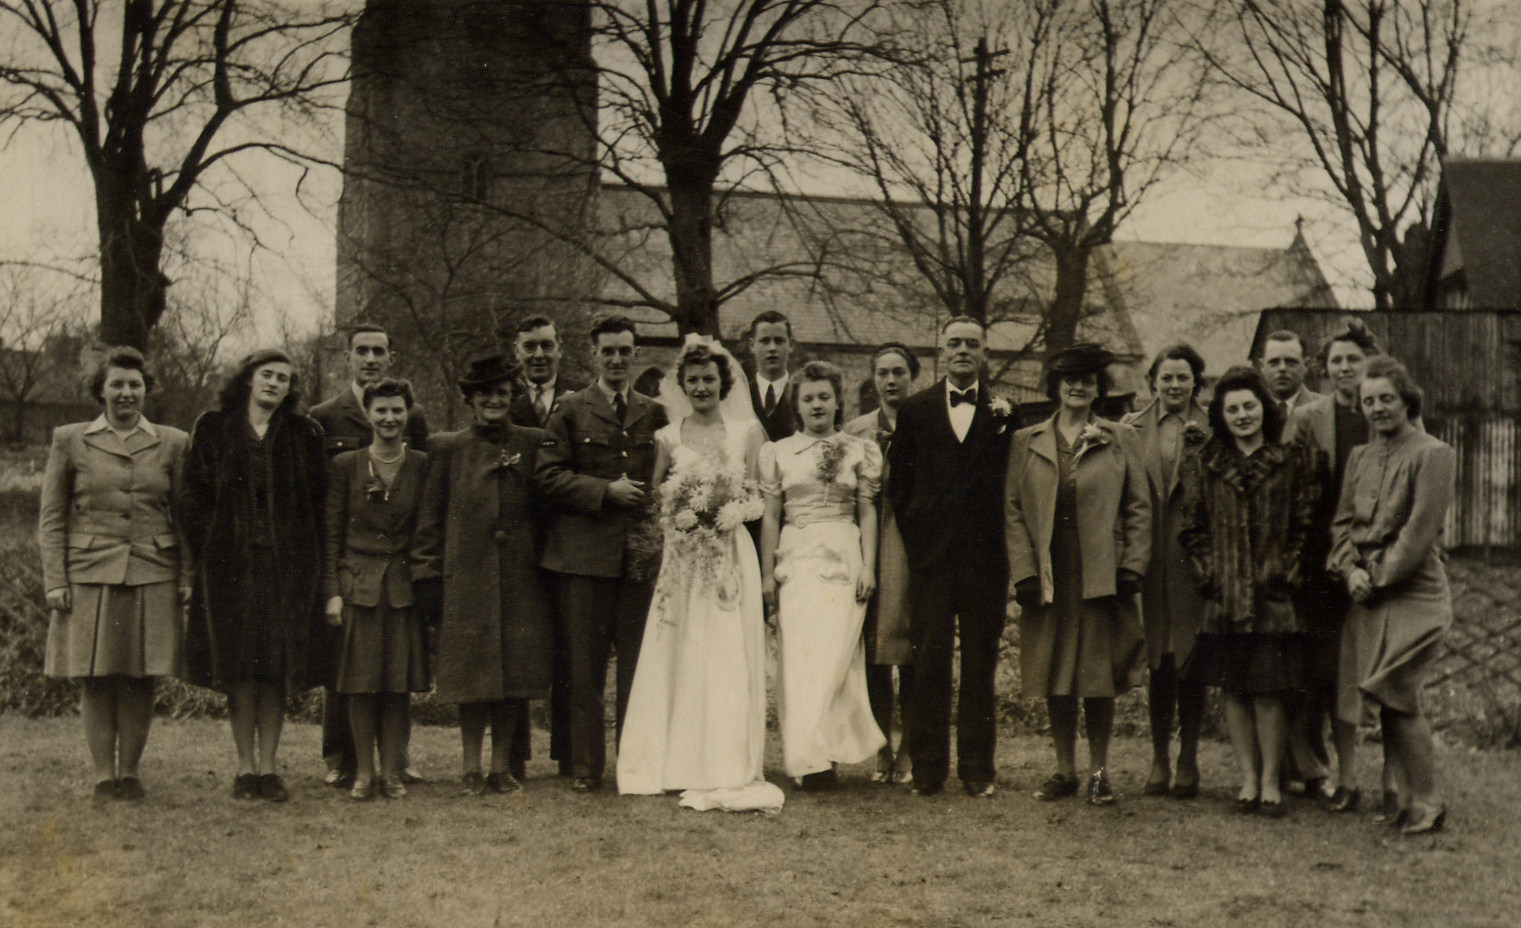 A Boughton Wedding Post World War II'